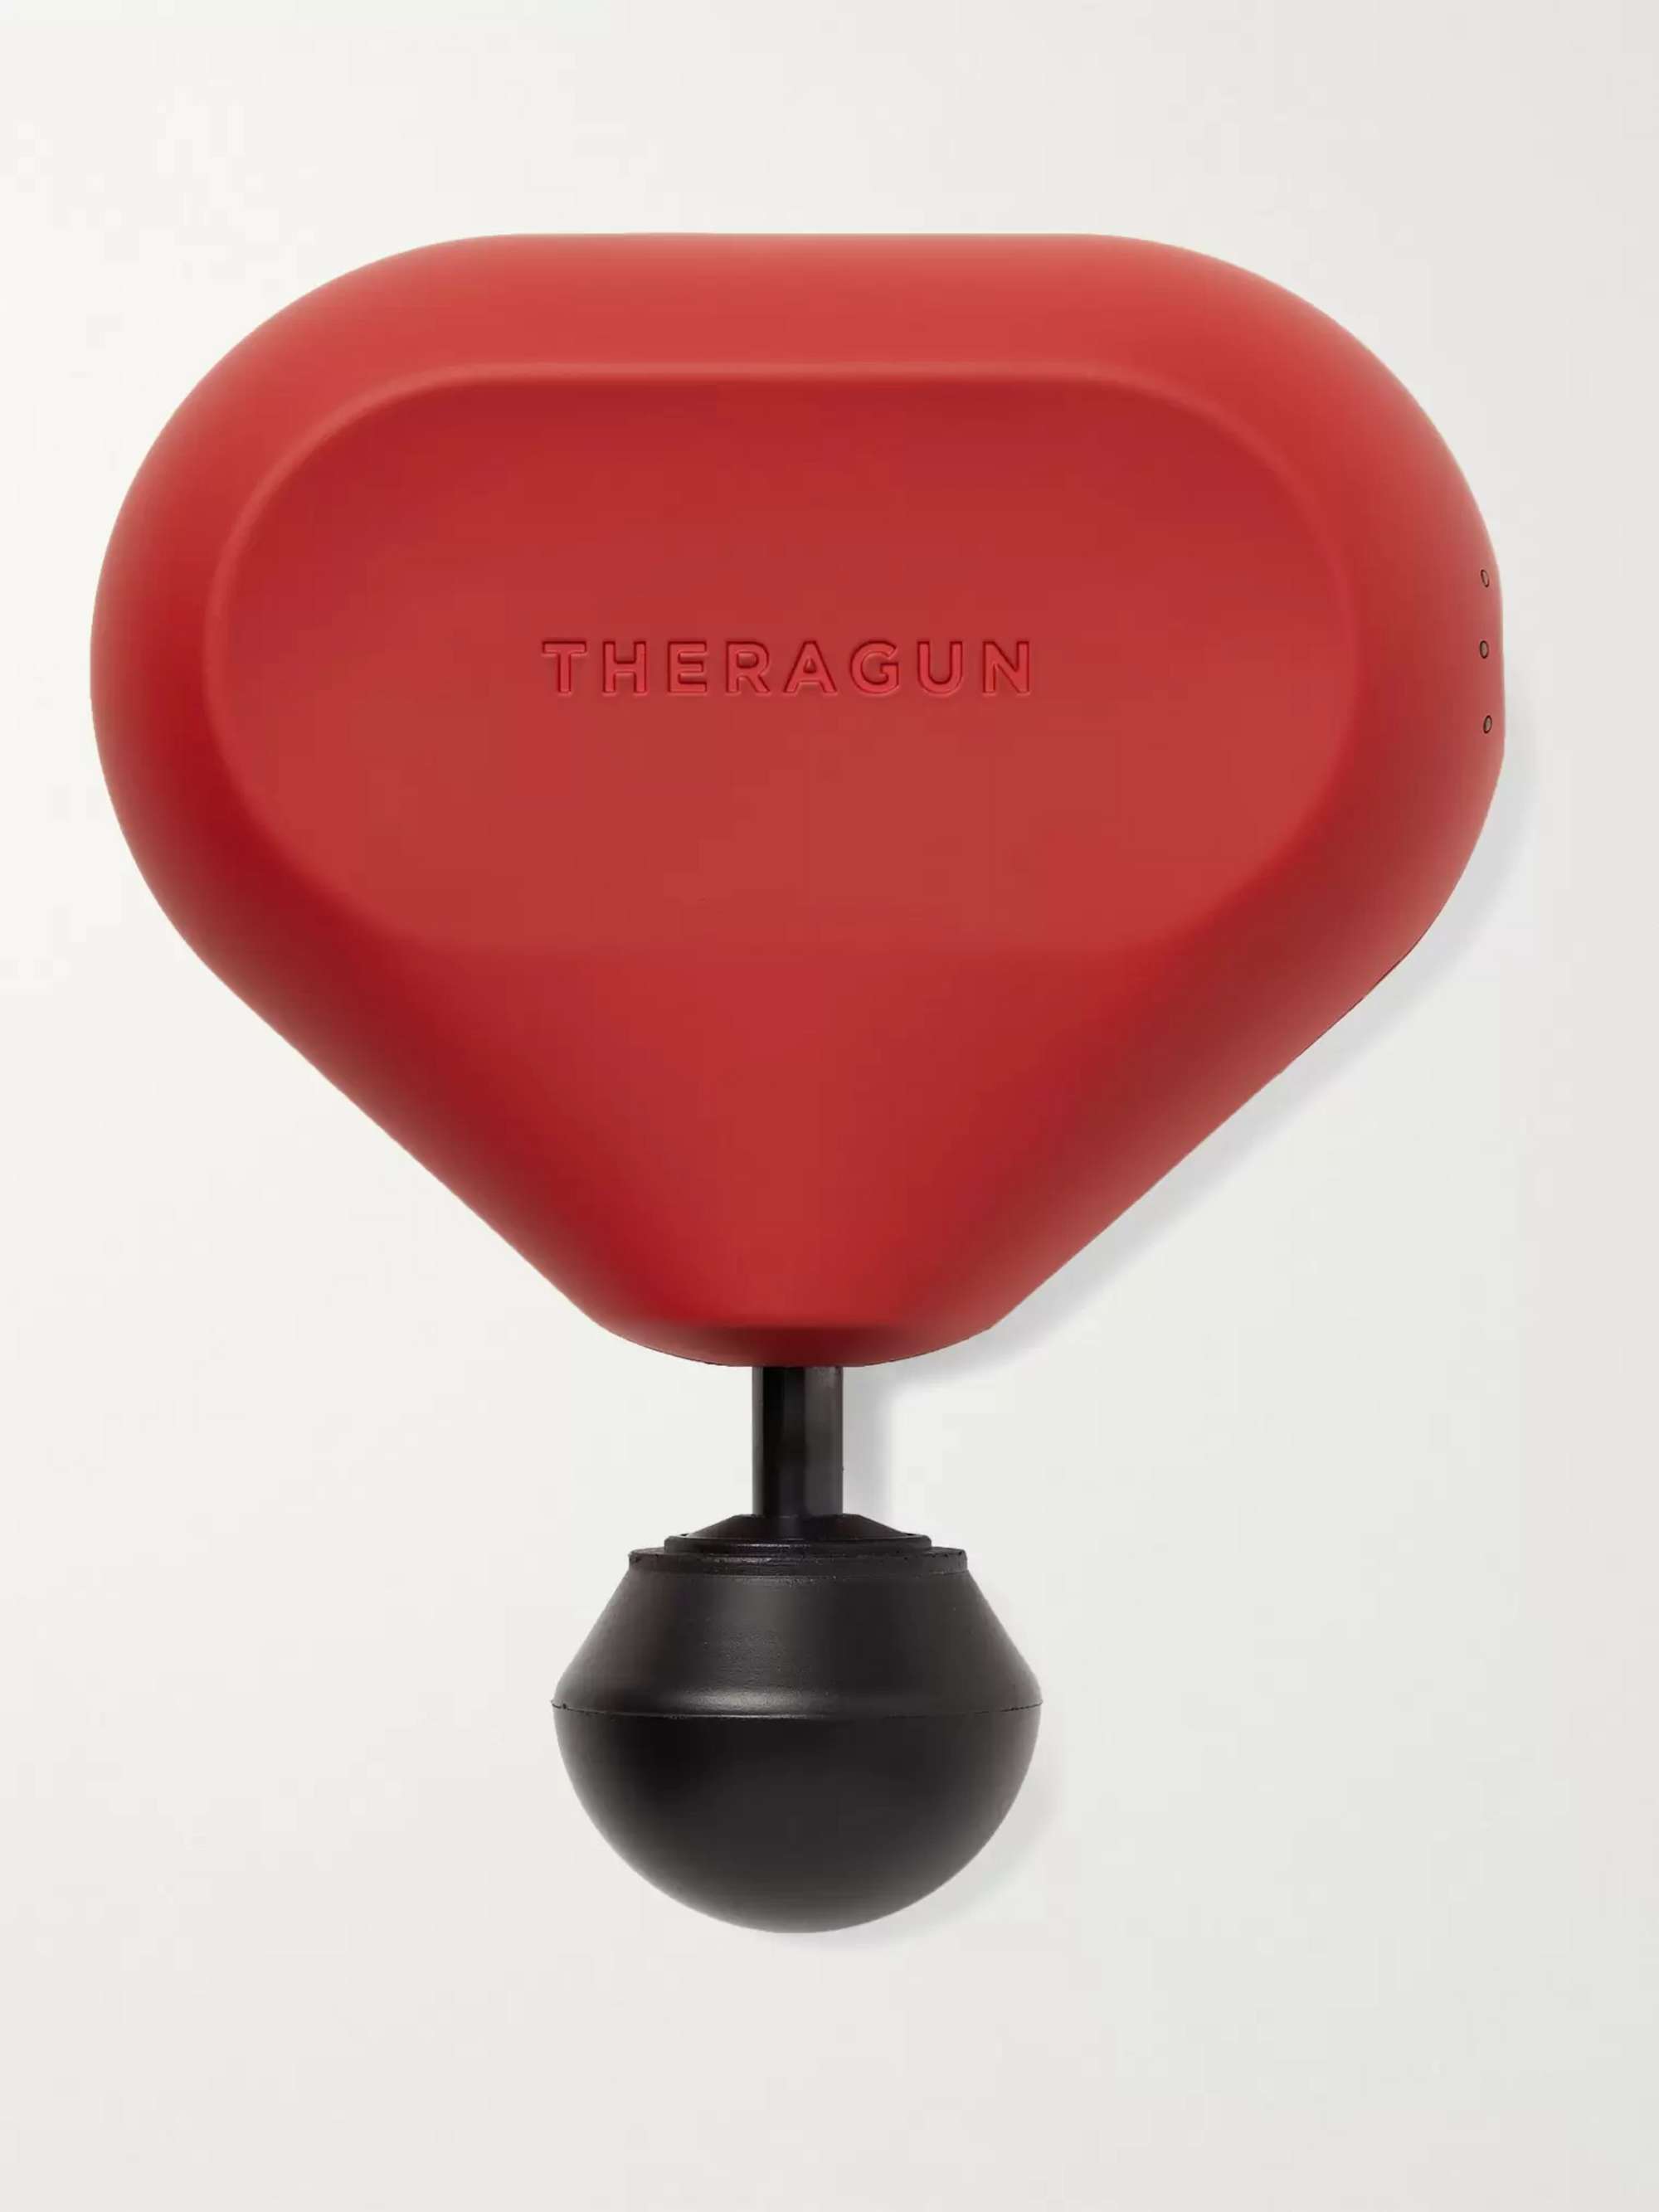 THERABODY + (RED) Theragun Mini Portable Massager